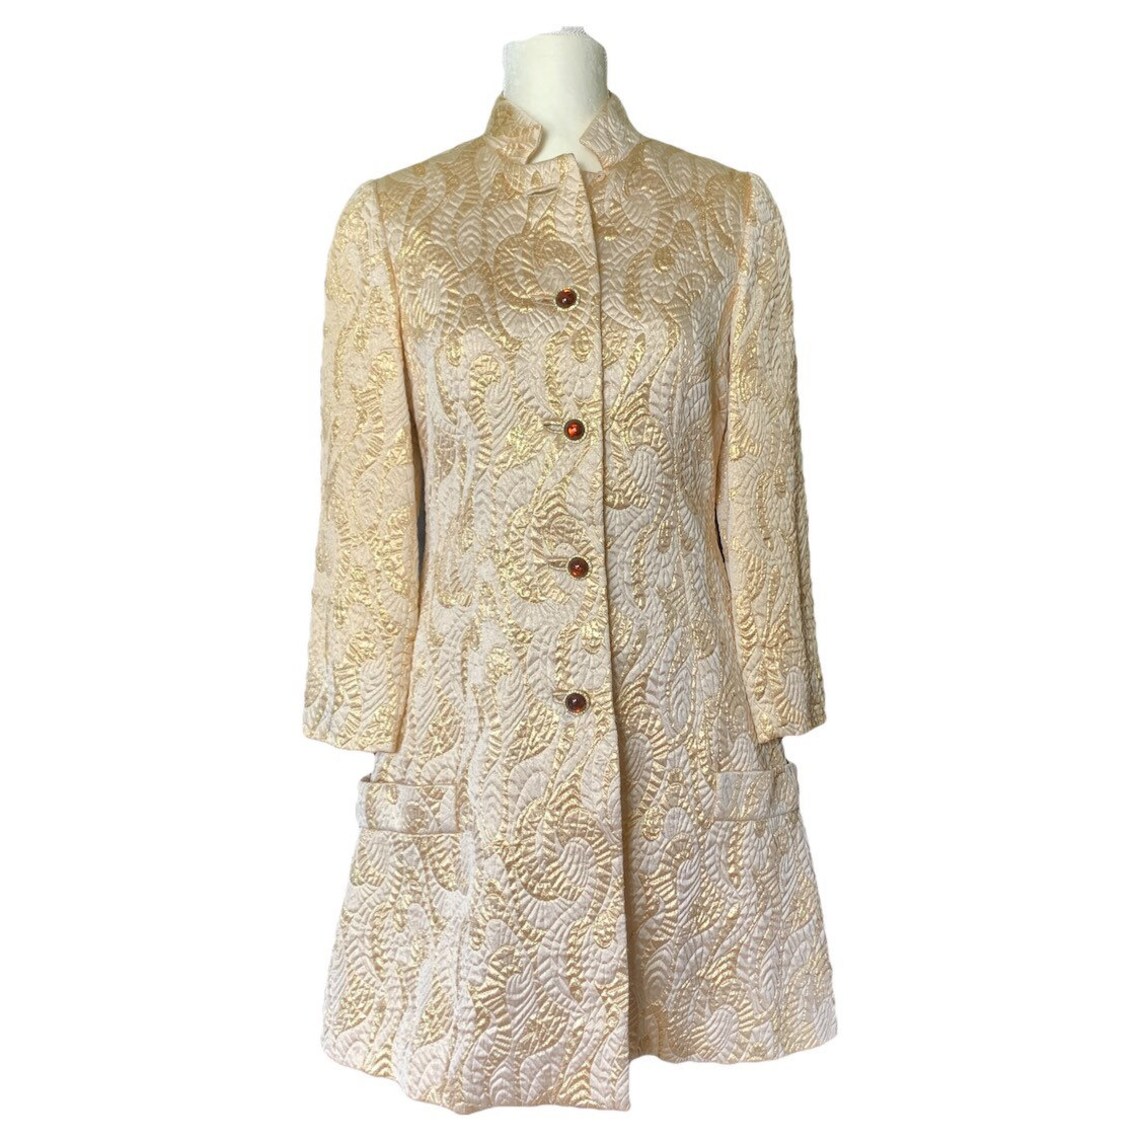 1960s Gold Metallic GoGo Dress Coat for Montaldo's. | Etsy